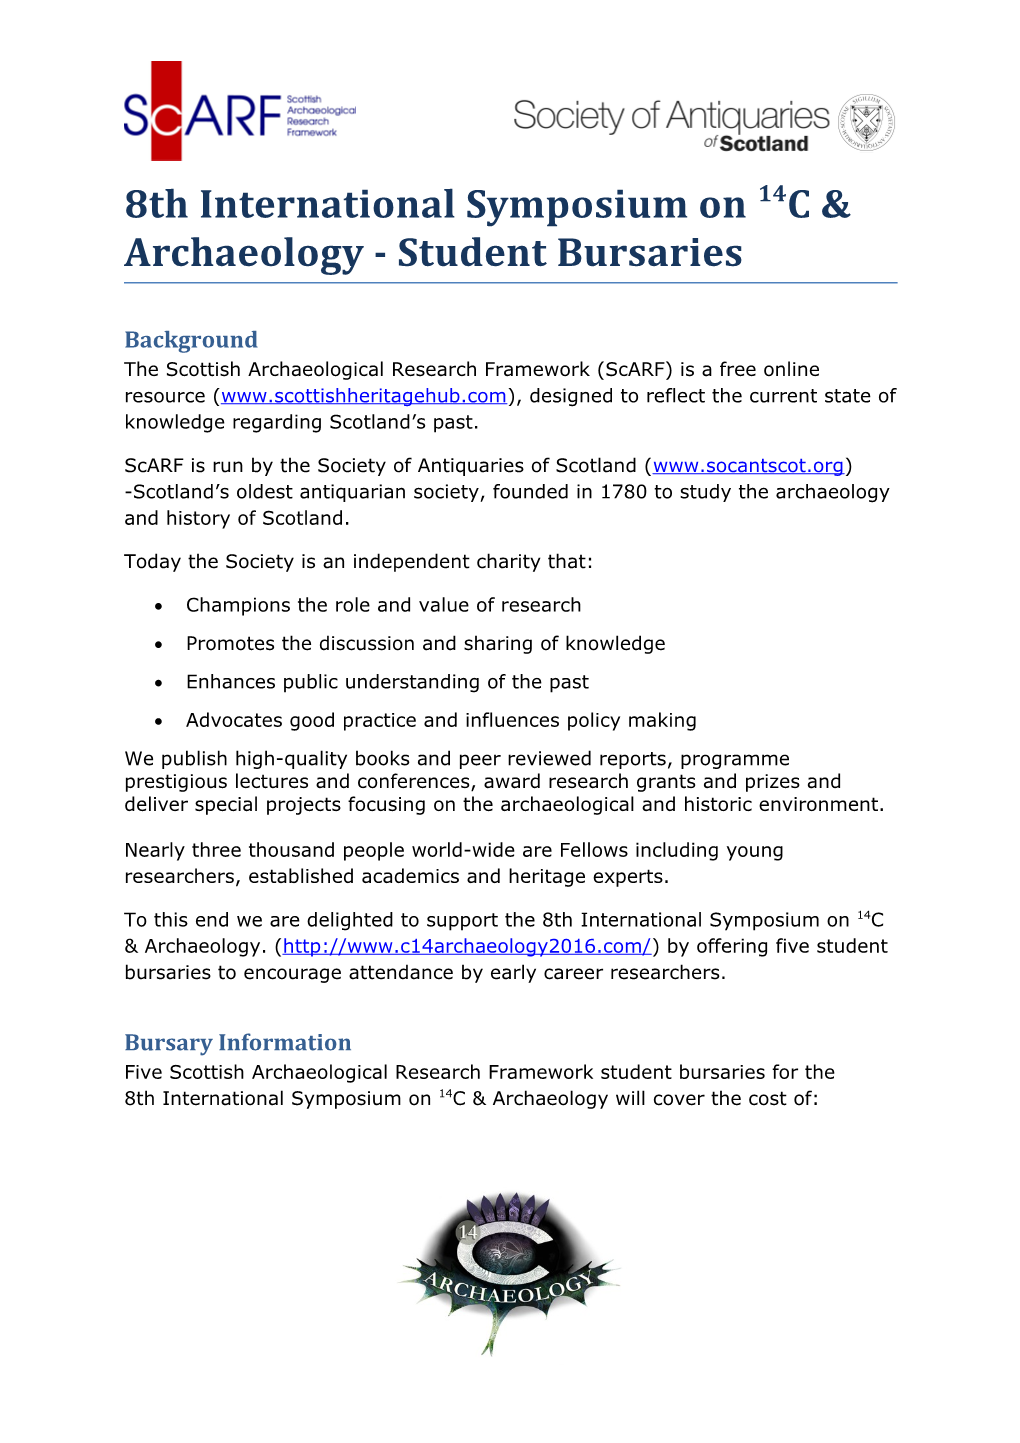 8Thinternational Symposium On14c & Archaeology - Student Bursaries